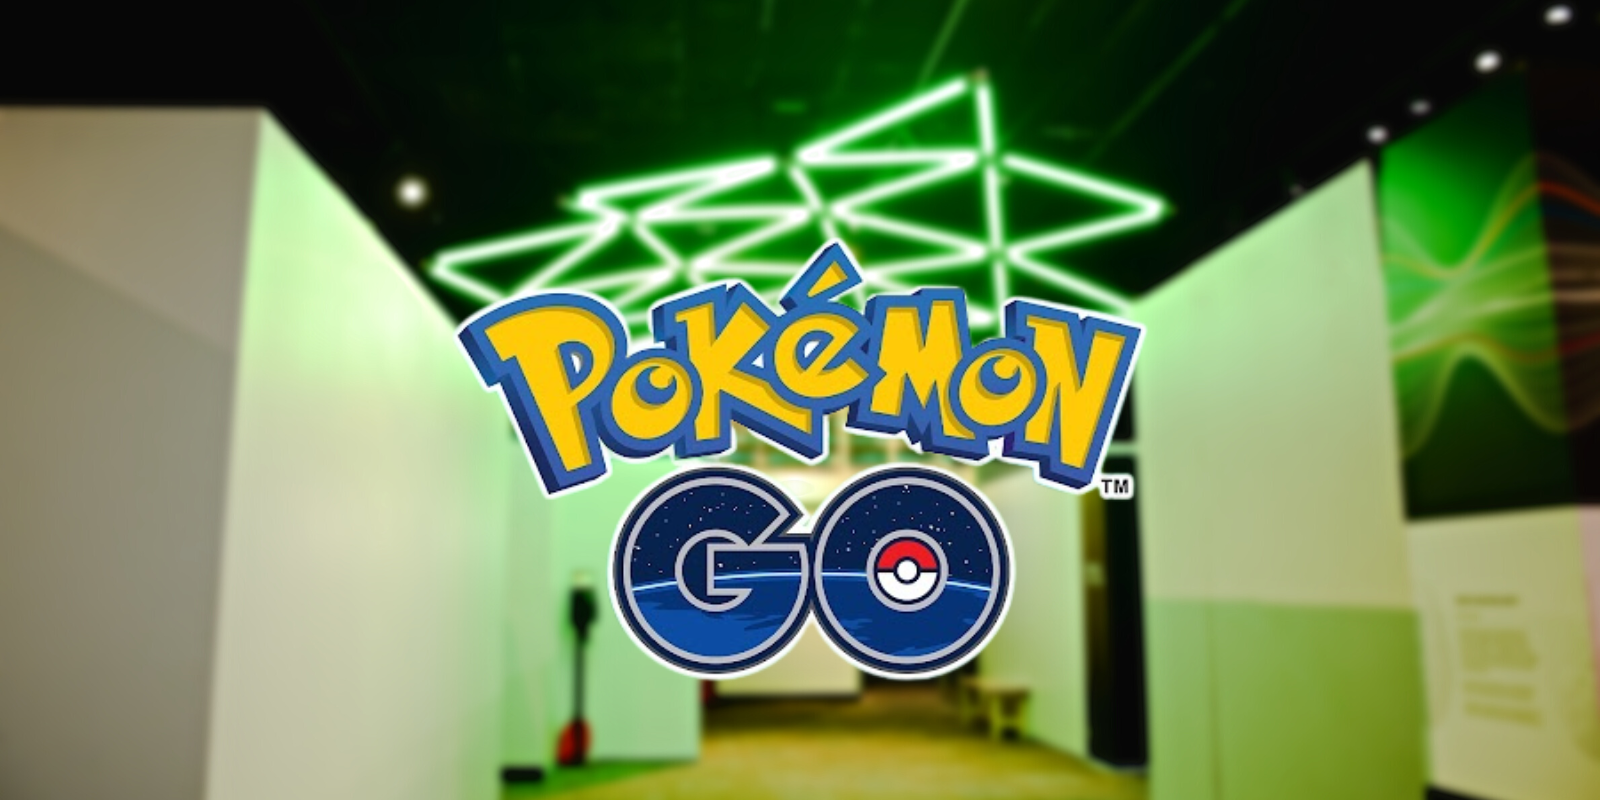 Pokemon Go logo in front of a neon light instillation at the Fleet Science center